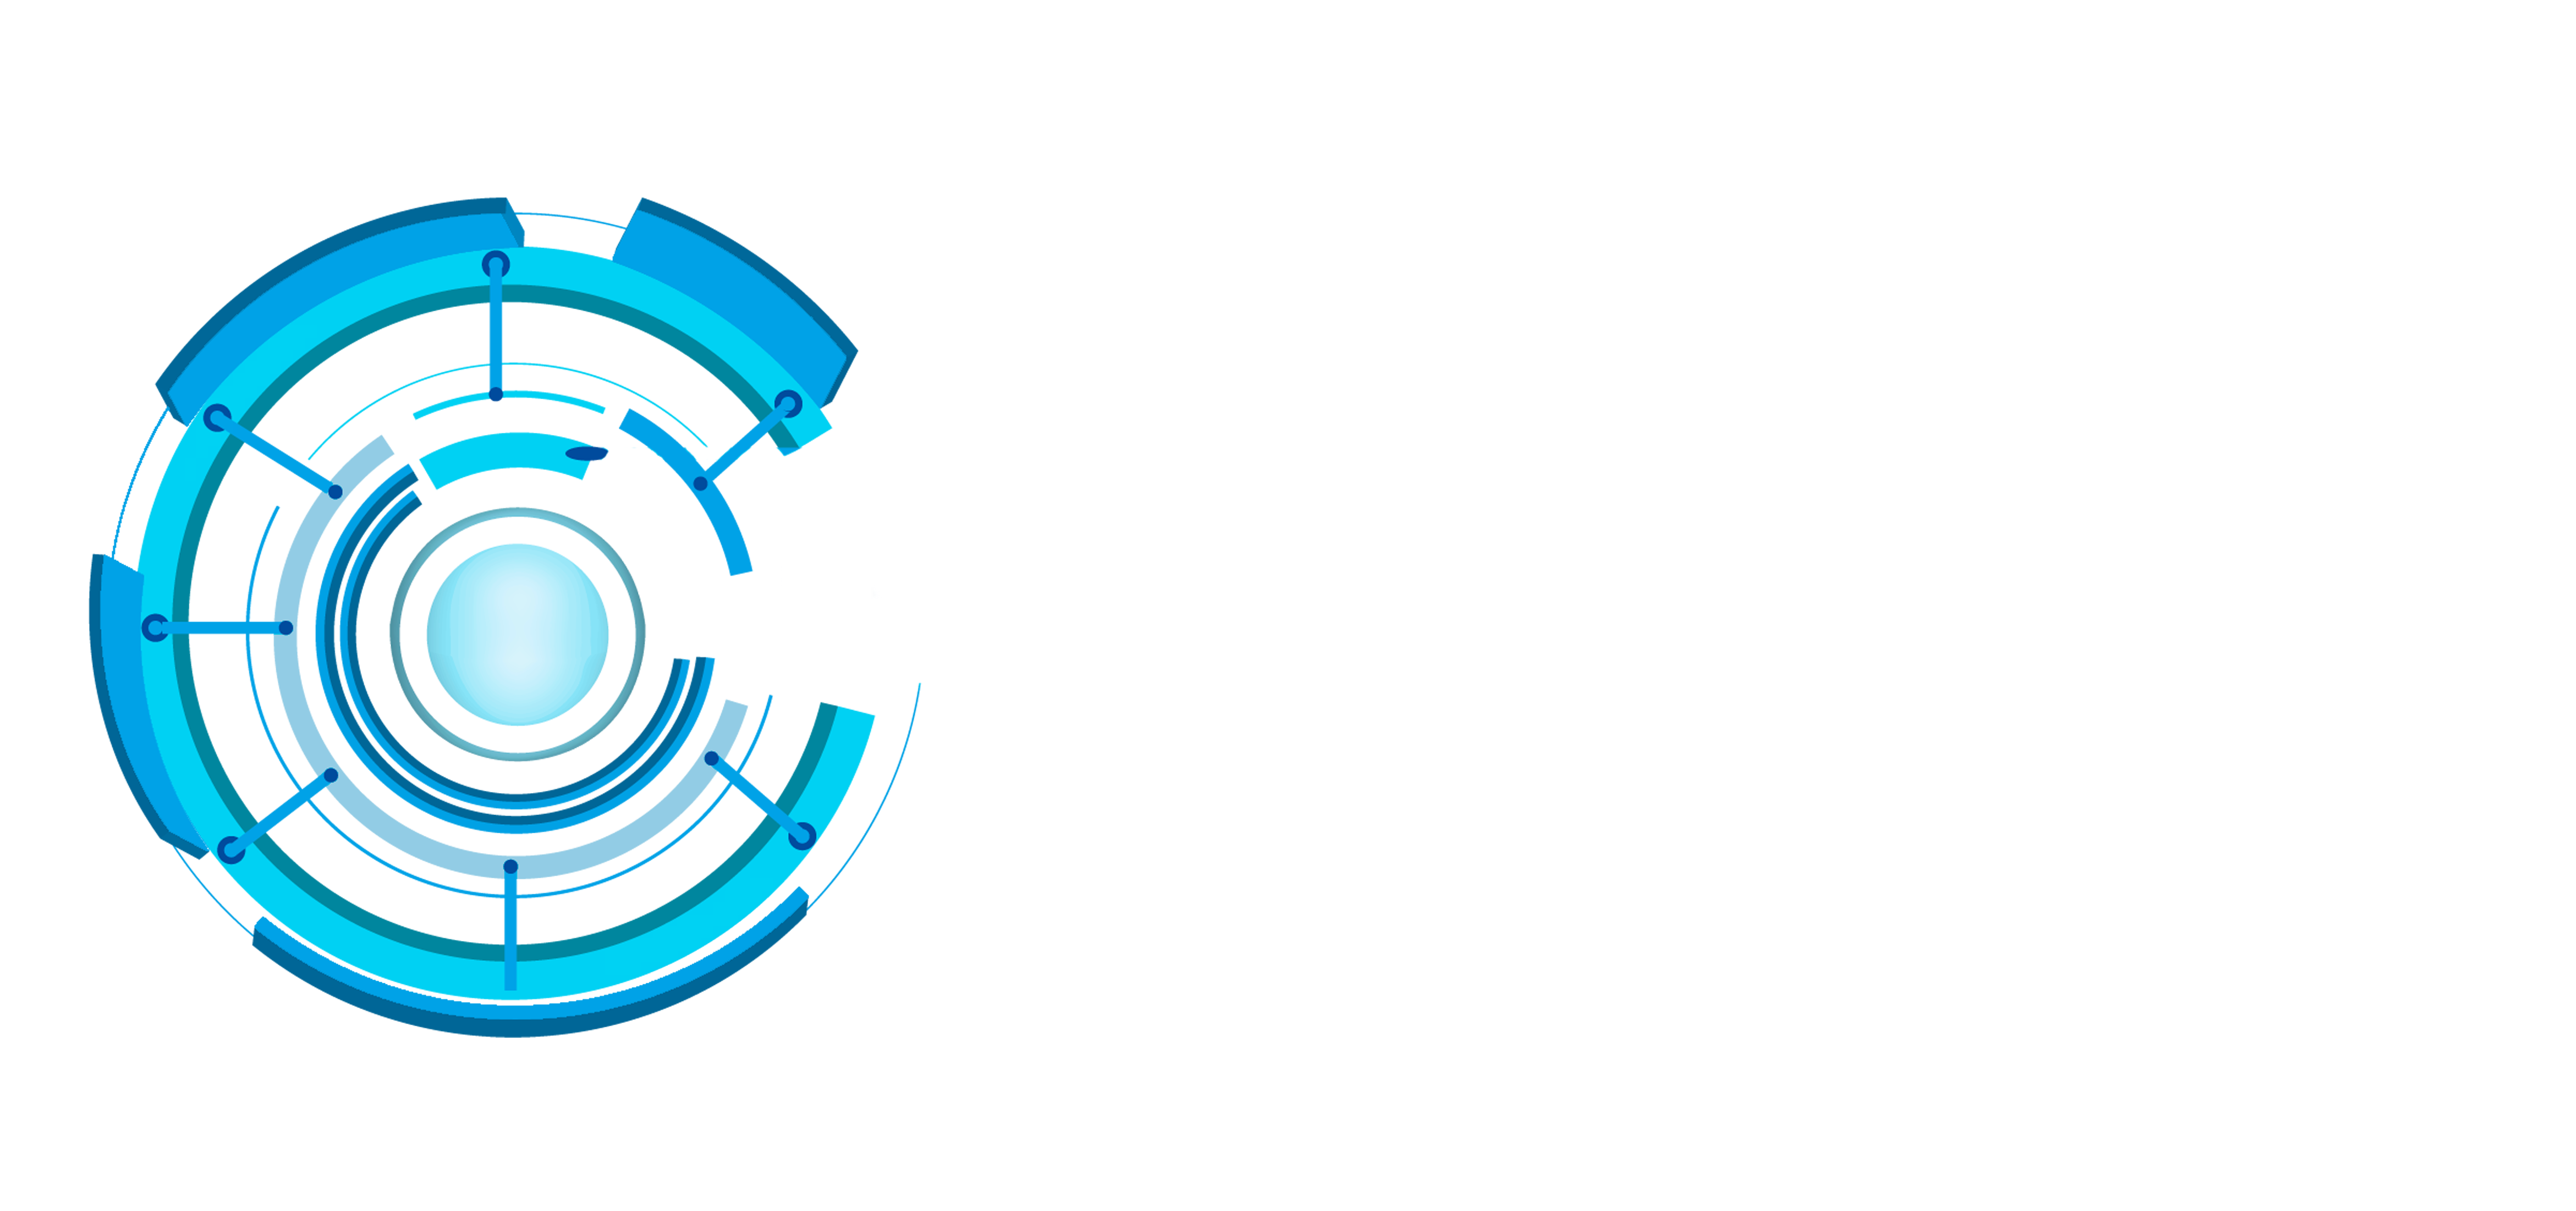 Intelligent_networks